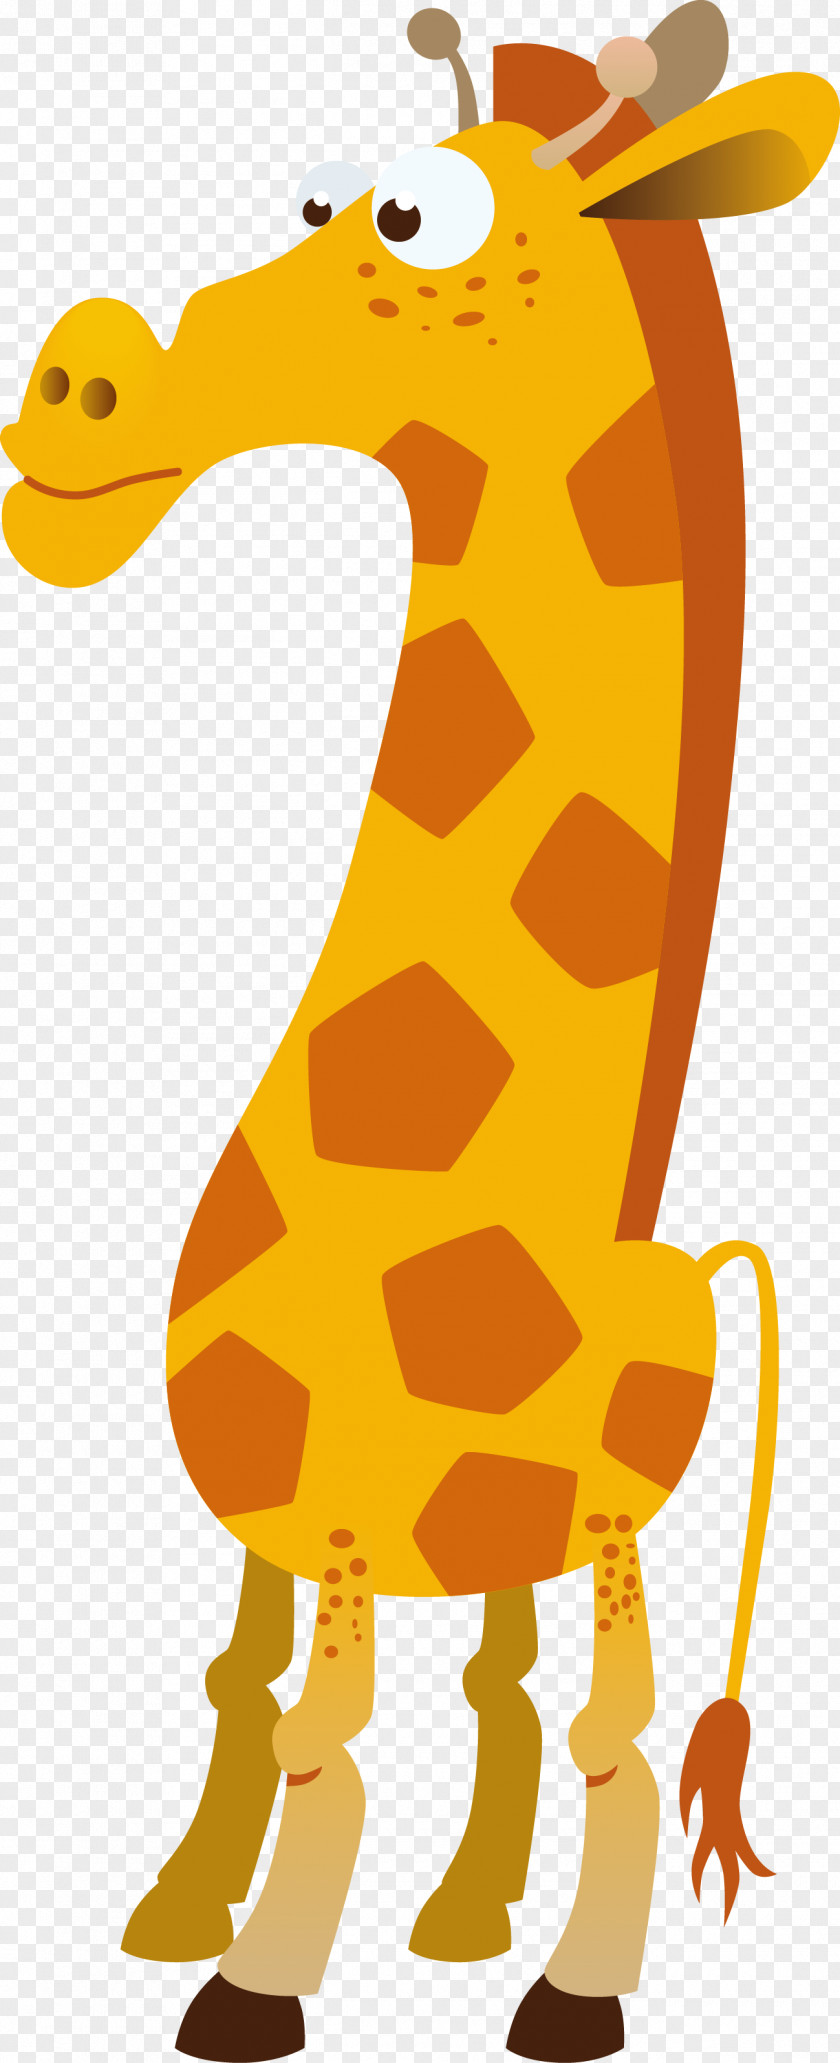 Giraffe Cartoon Vector Northern Animal PNG